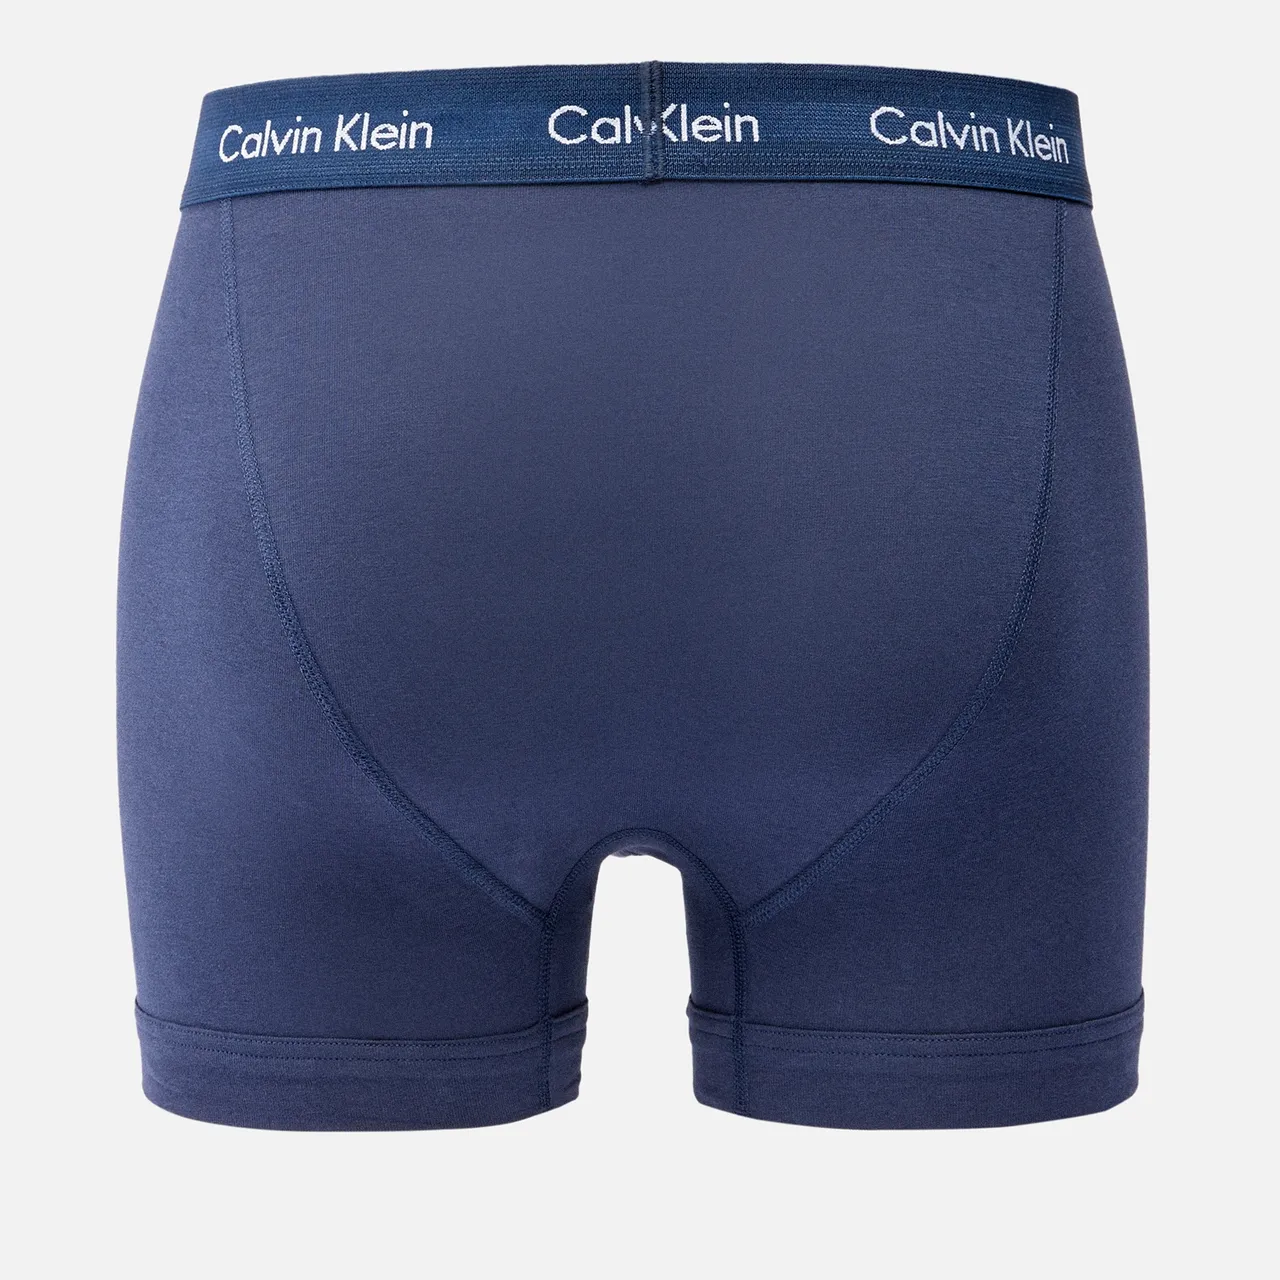 Calvin Klein Men's Cotton Stretch 3-Pack Trunks - Black/Blue/Blue